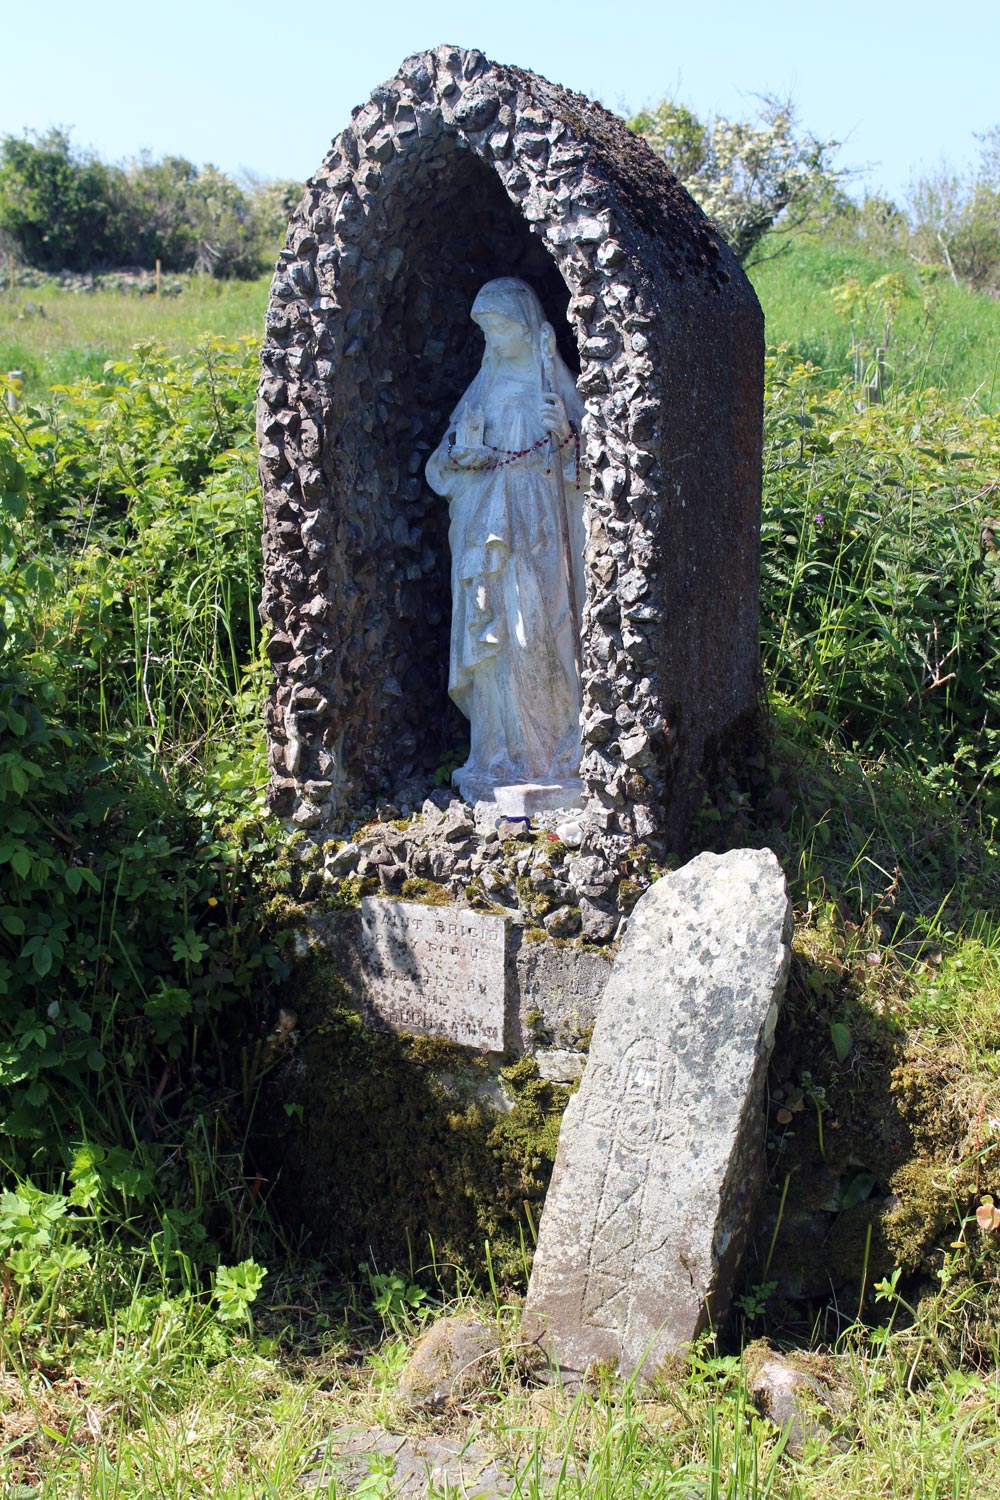 The early Christian cross-slab and modern statue of Saint Bridget.